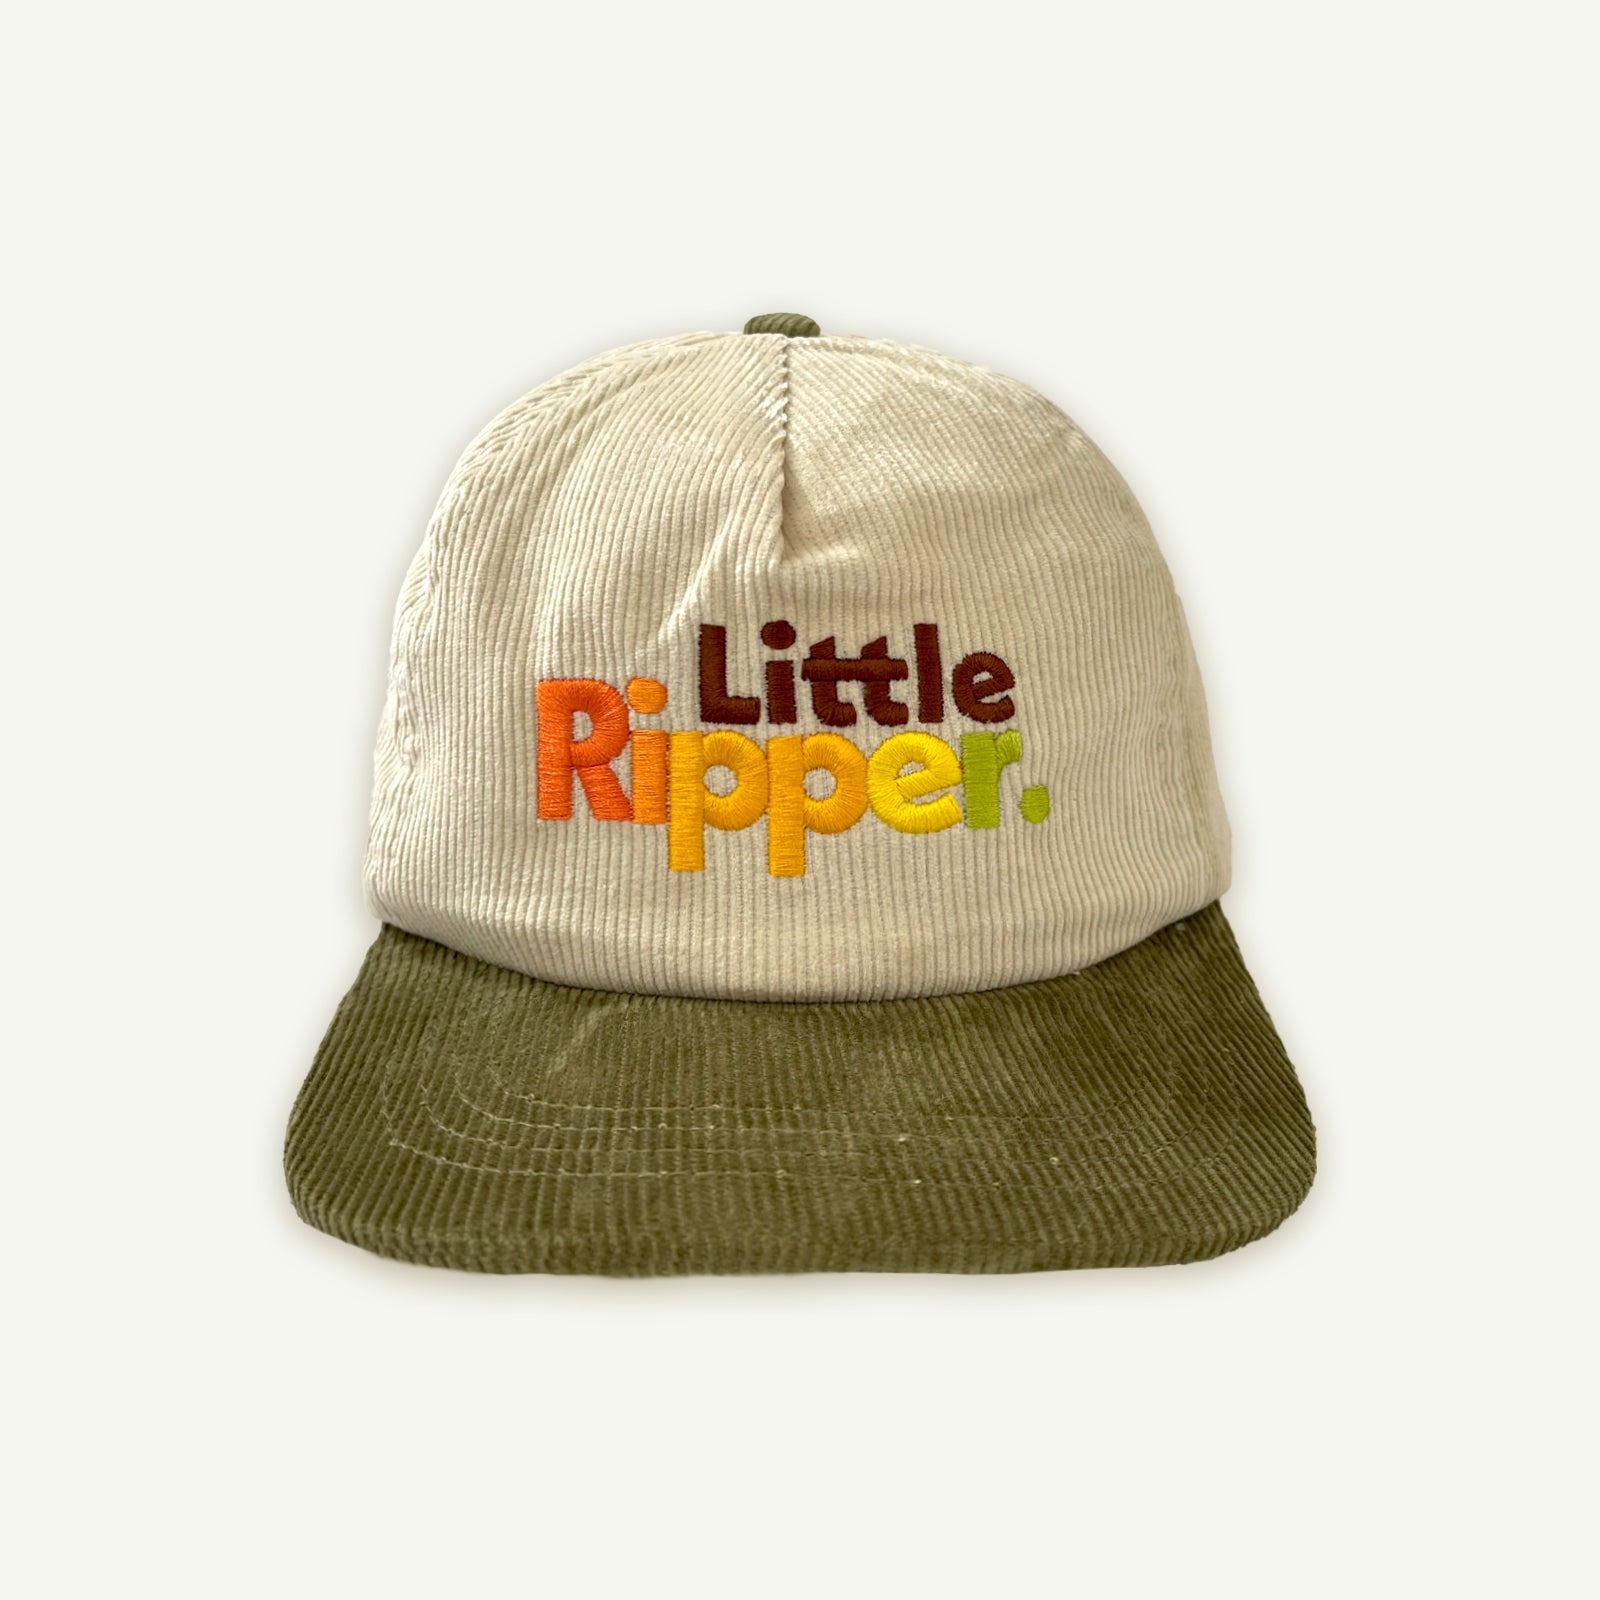 Little Ripper Cord Cap